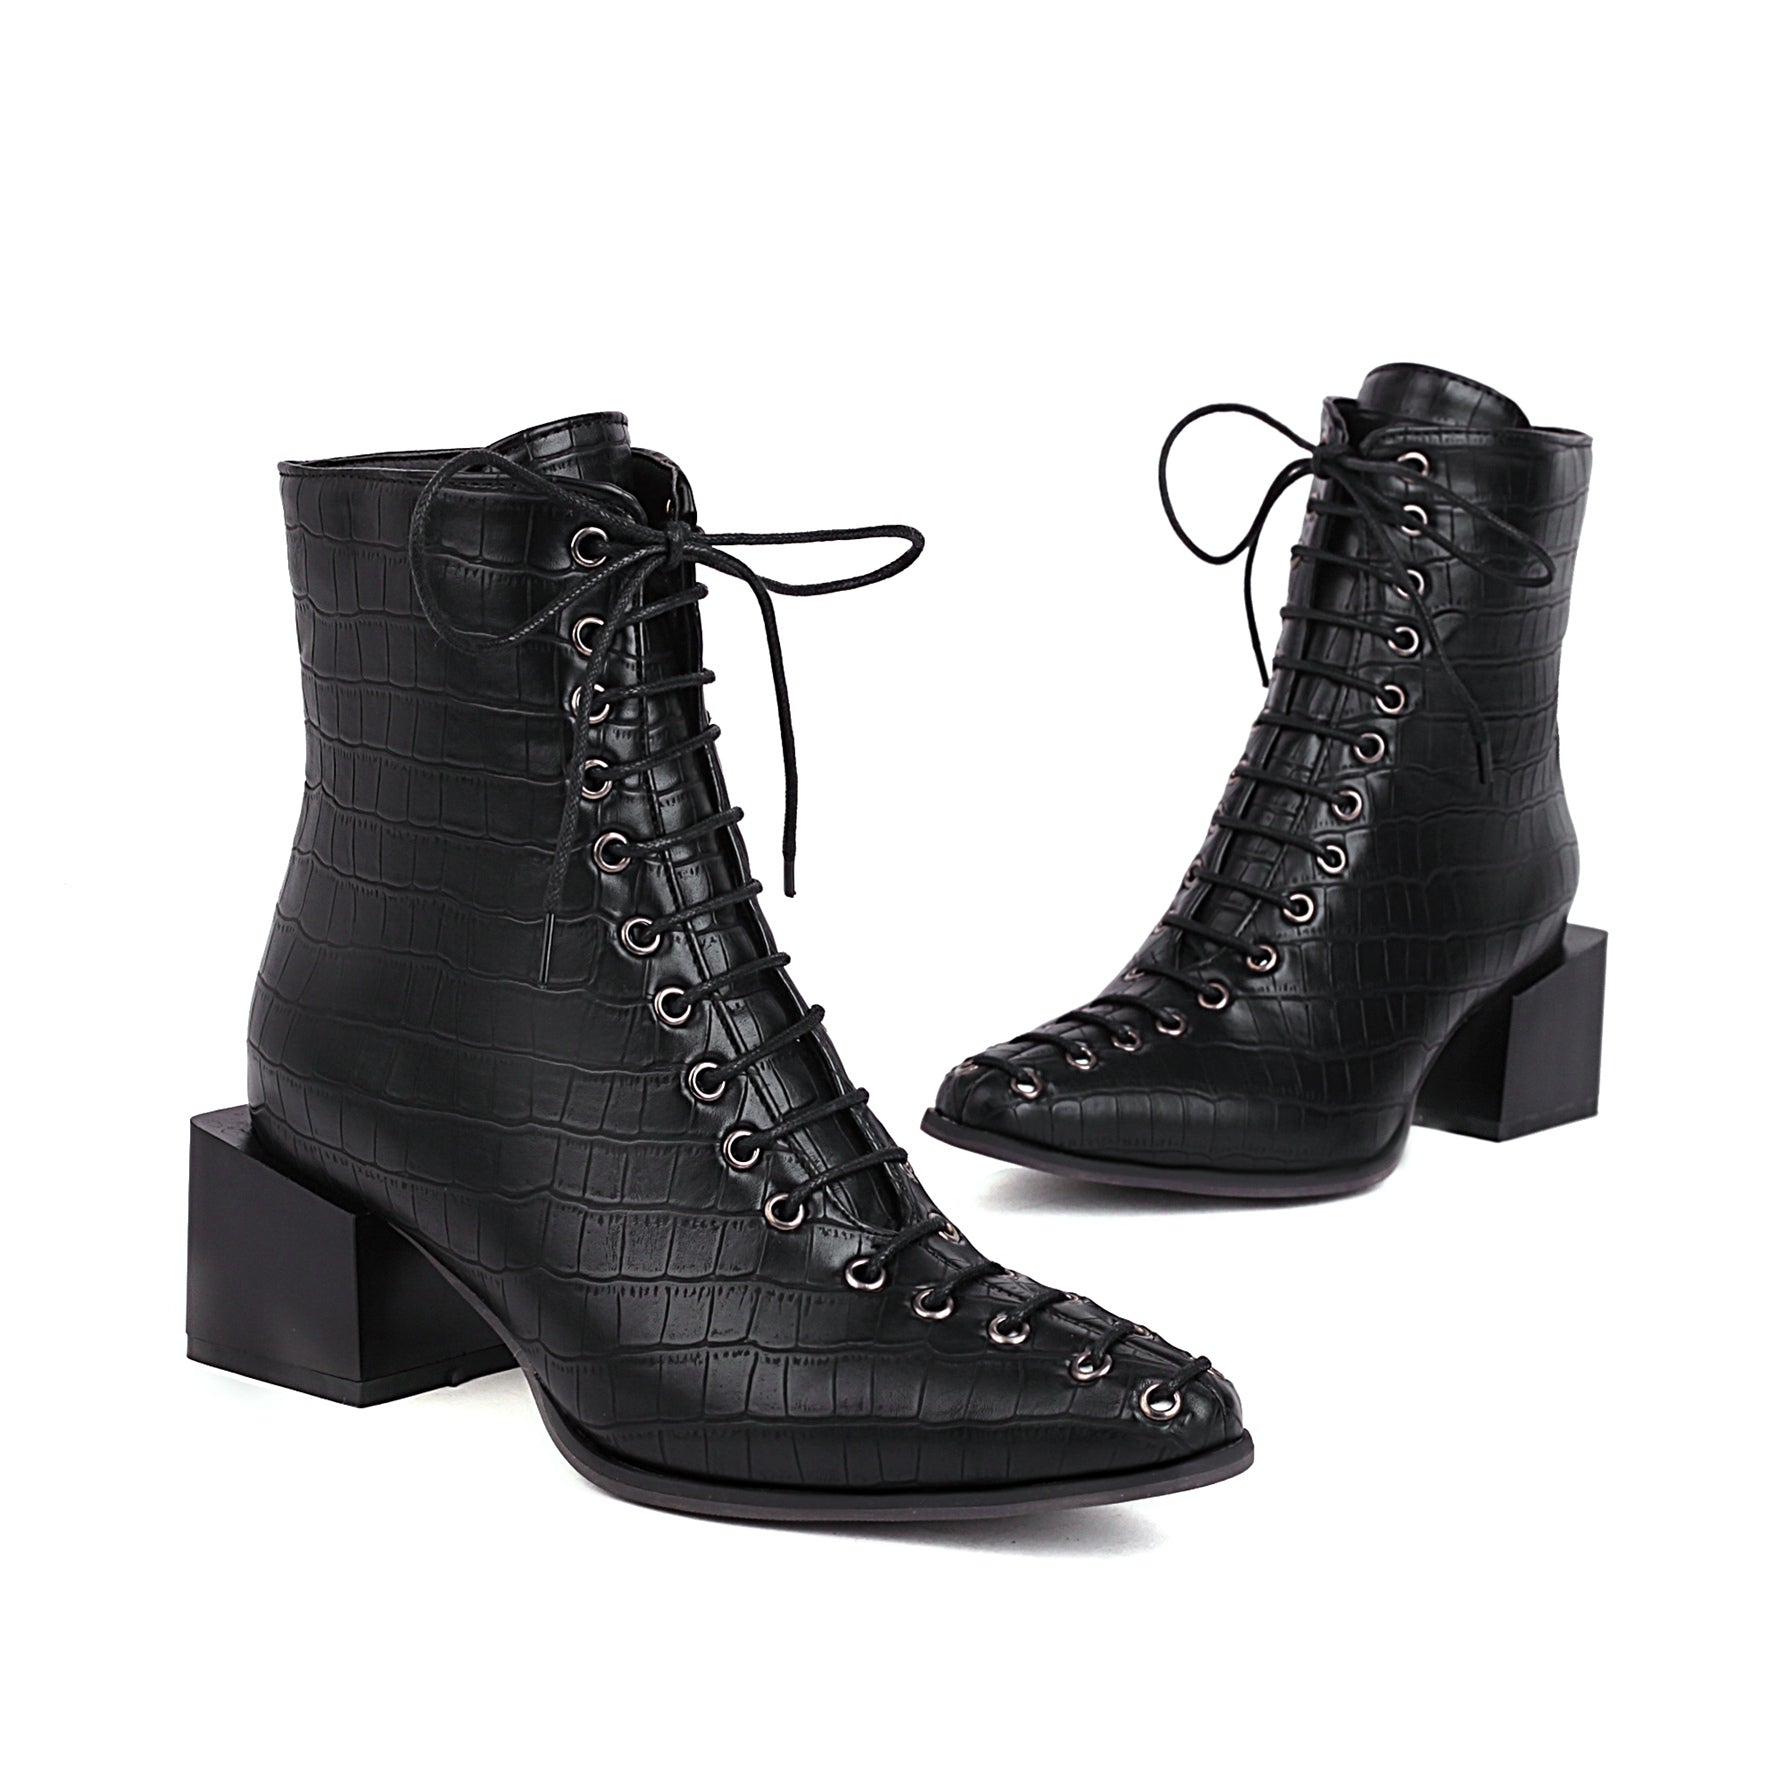 Bigsizeheels Calfskin lace-up Martin boots - Black freeshipping - bigsizeheel®-size5-size15 -All Plus Sizes Available!